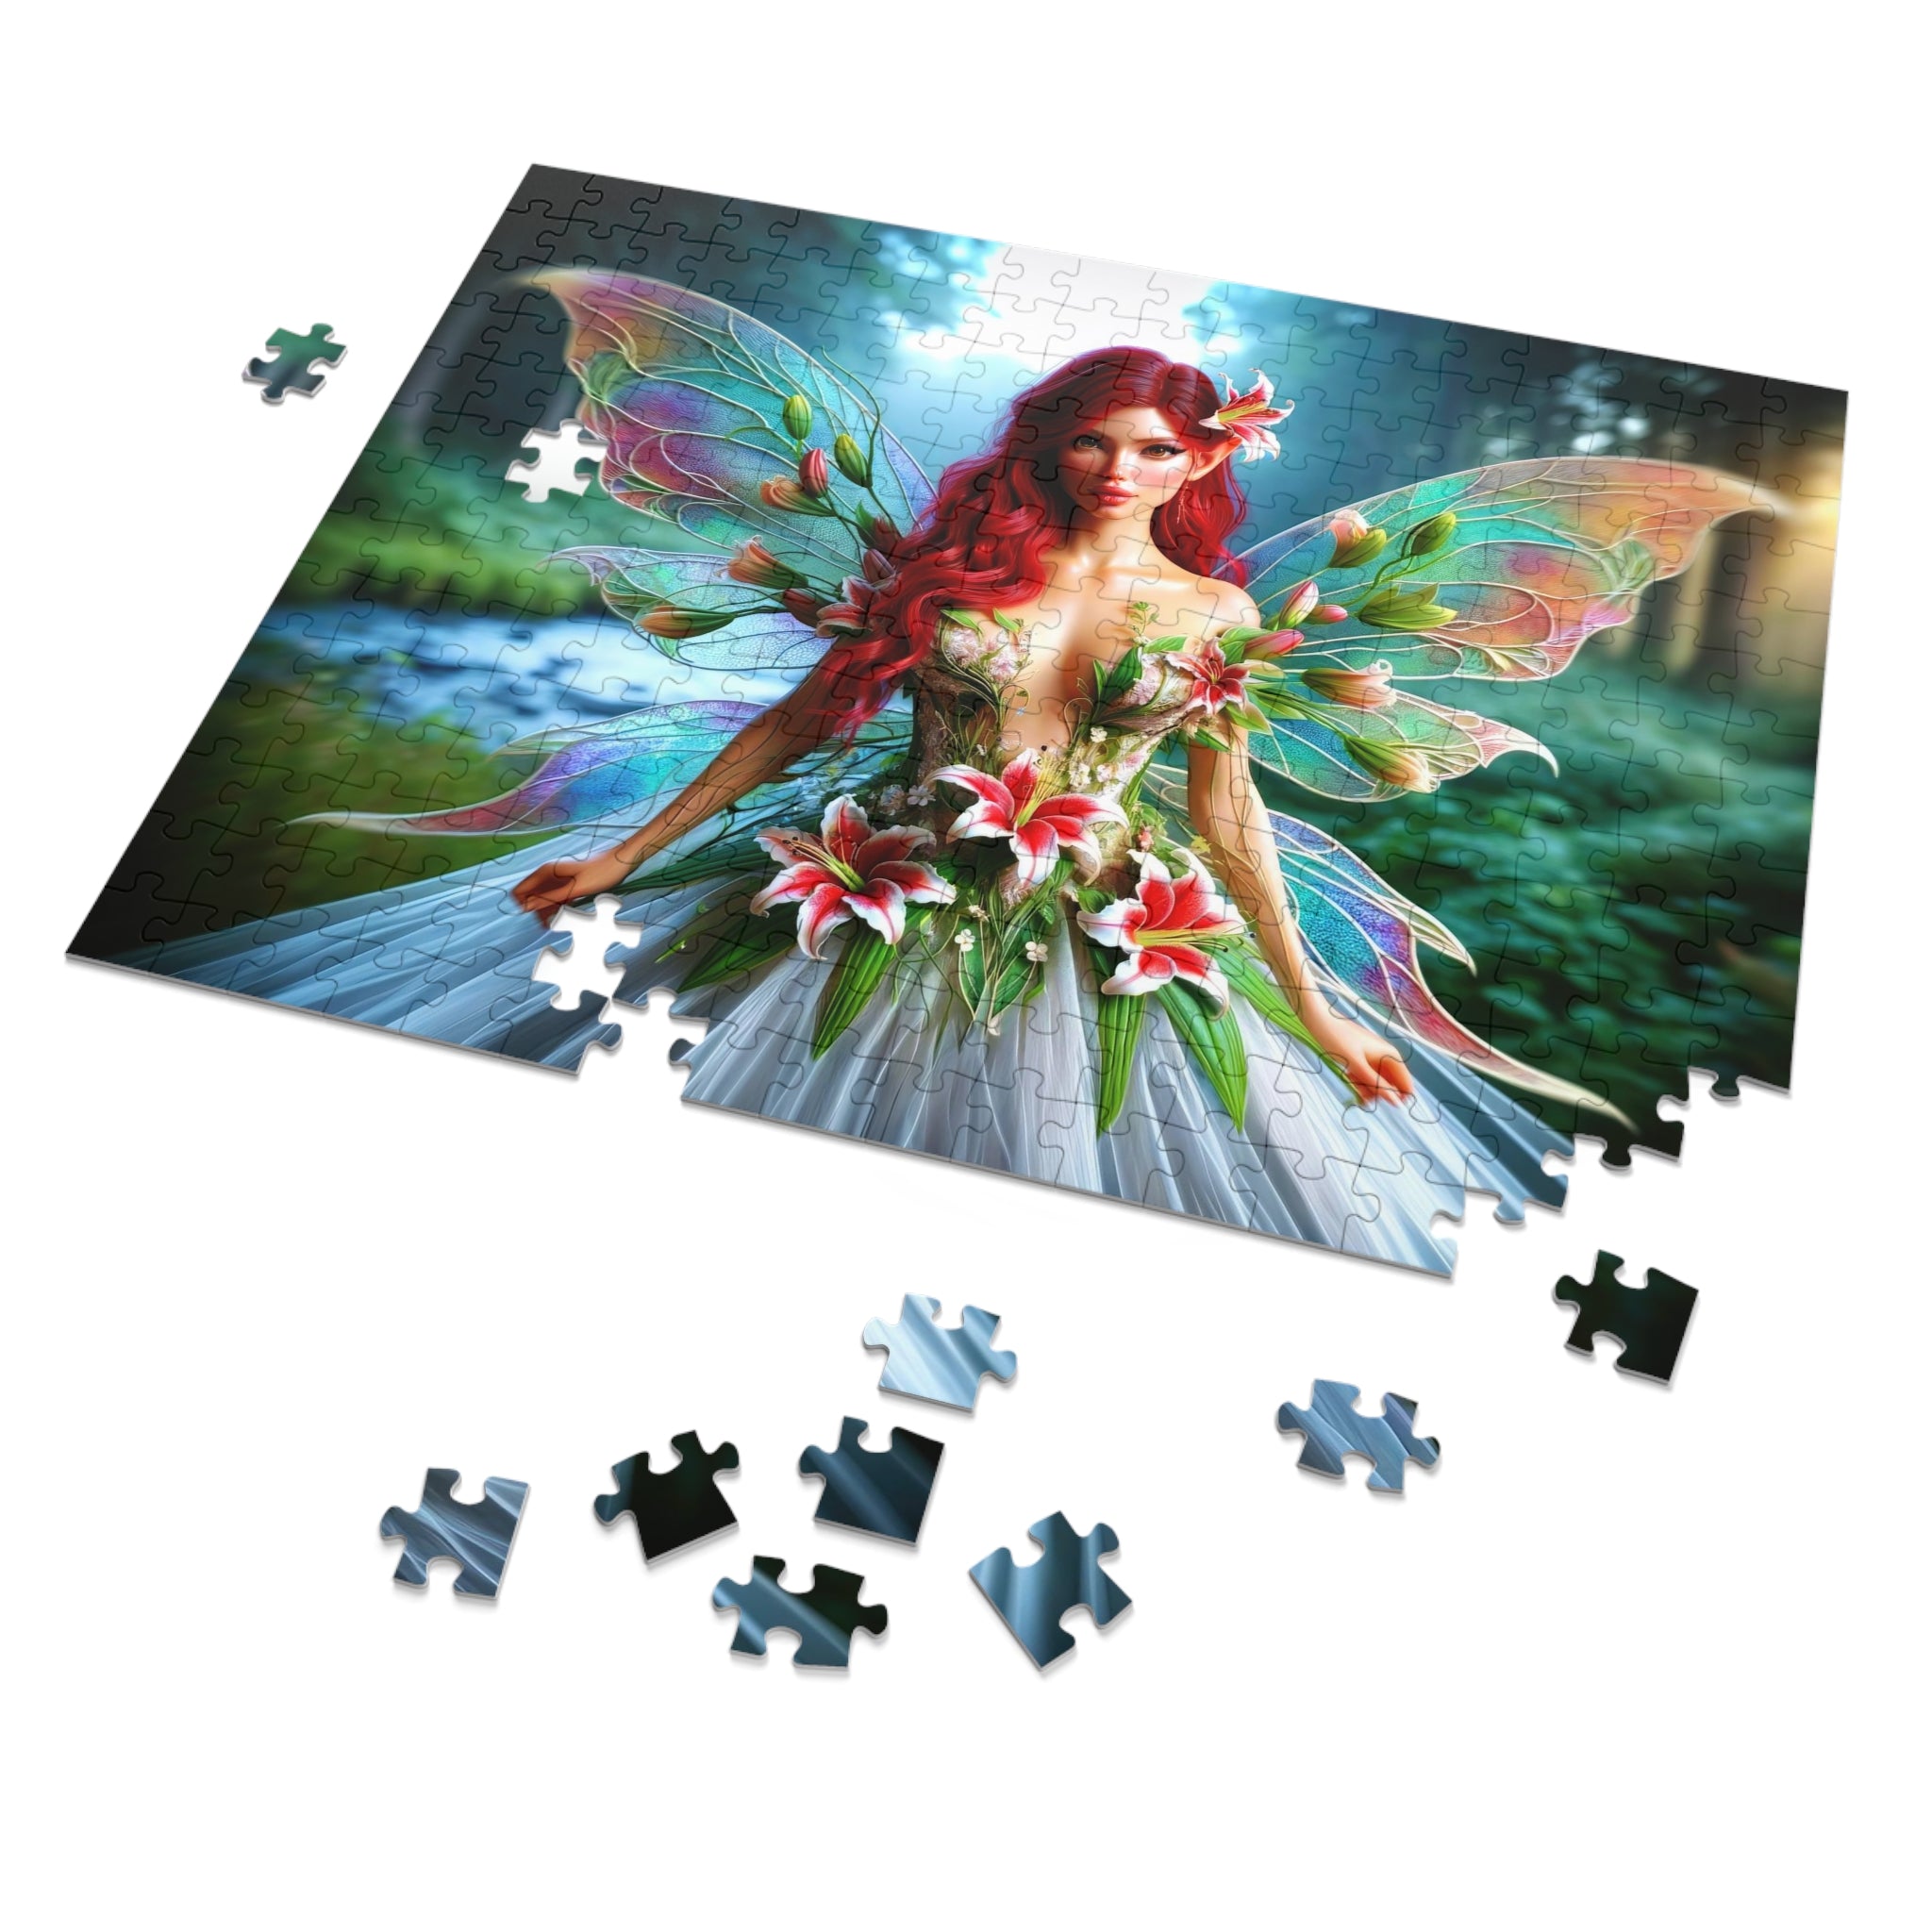 The Stargazer Fairy's Midsummer Night Dream Jigsaw Puzzle